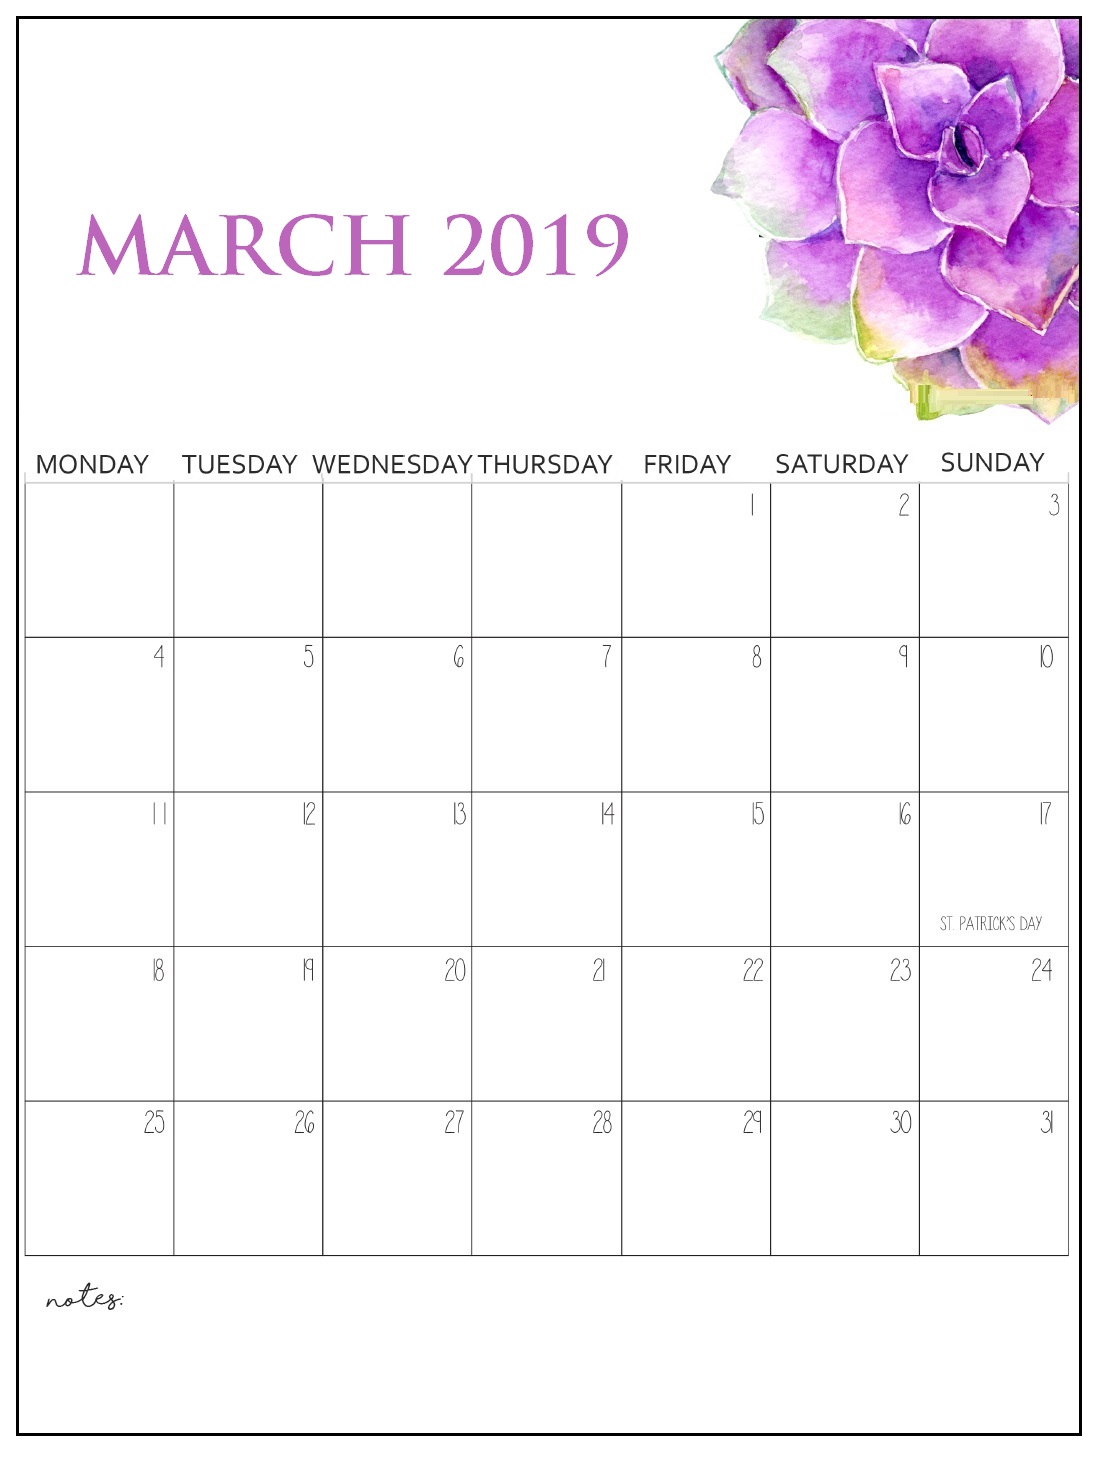 March 2019 Wall Calendar